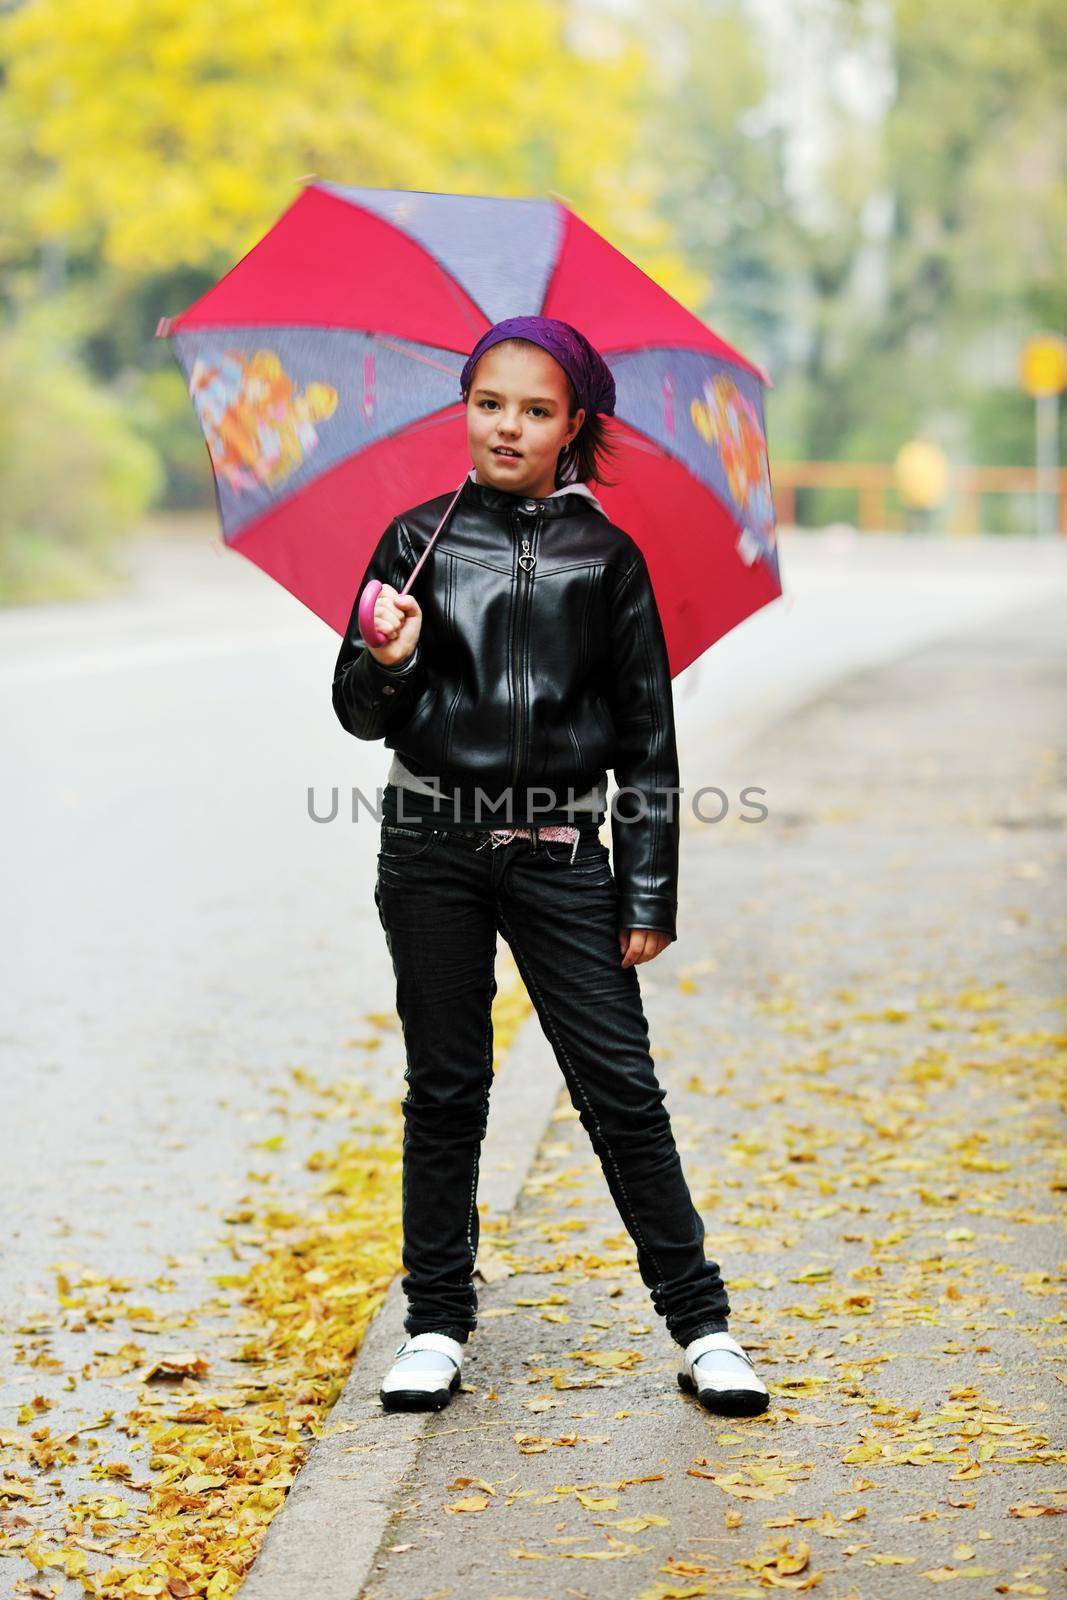 happy girl with umbrella outdoor in park on autumn season rain day